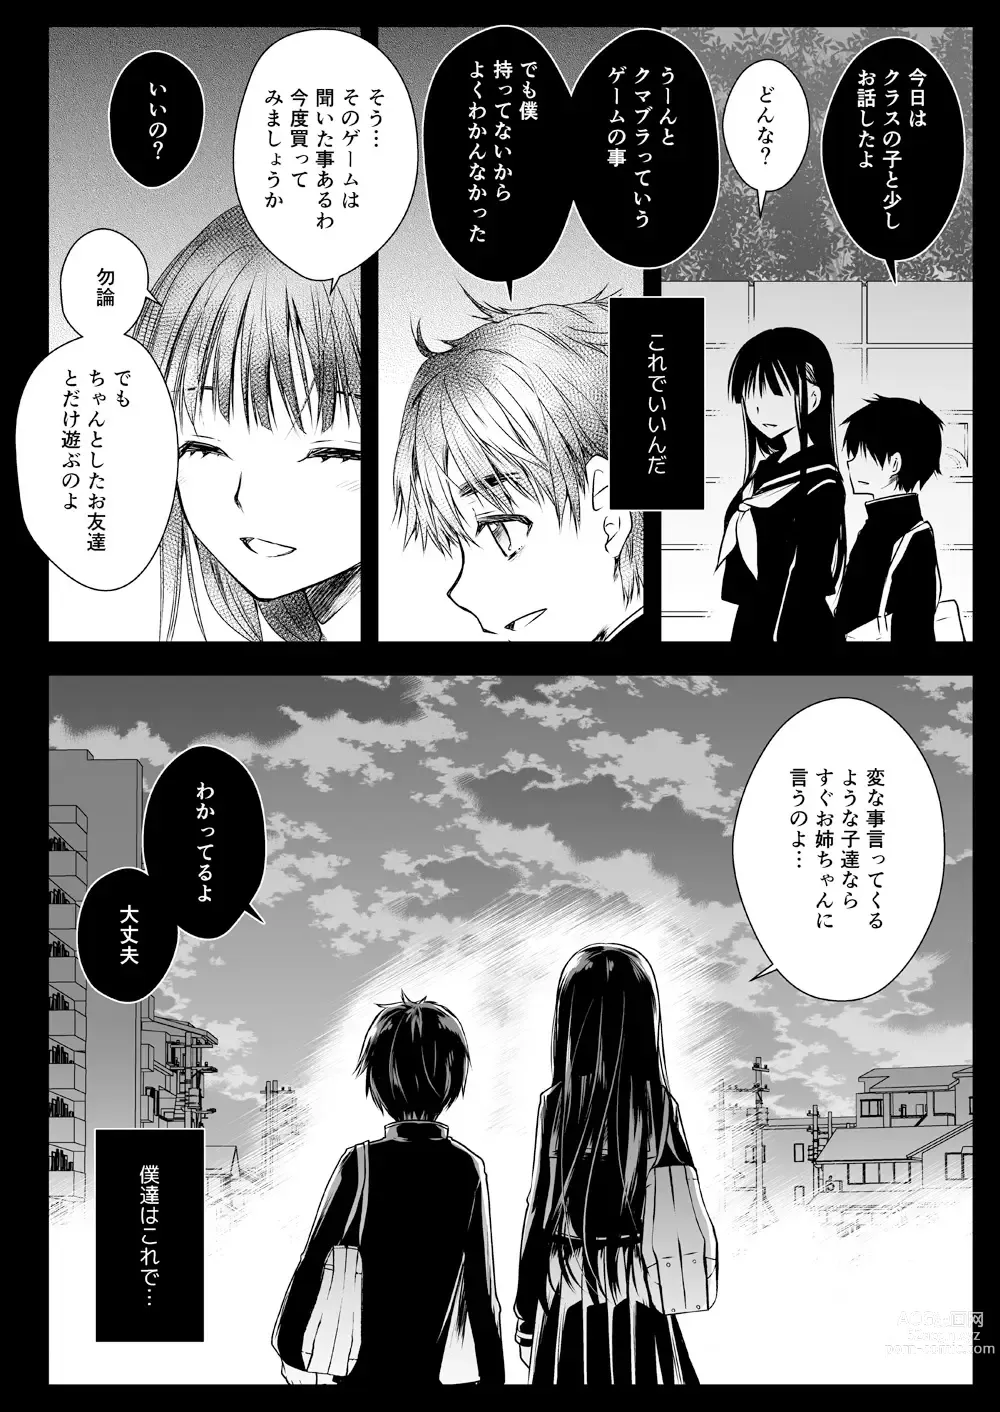 Page 29 of manga Kyou izon Kyoudai